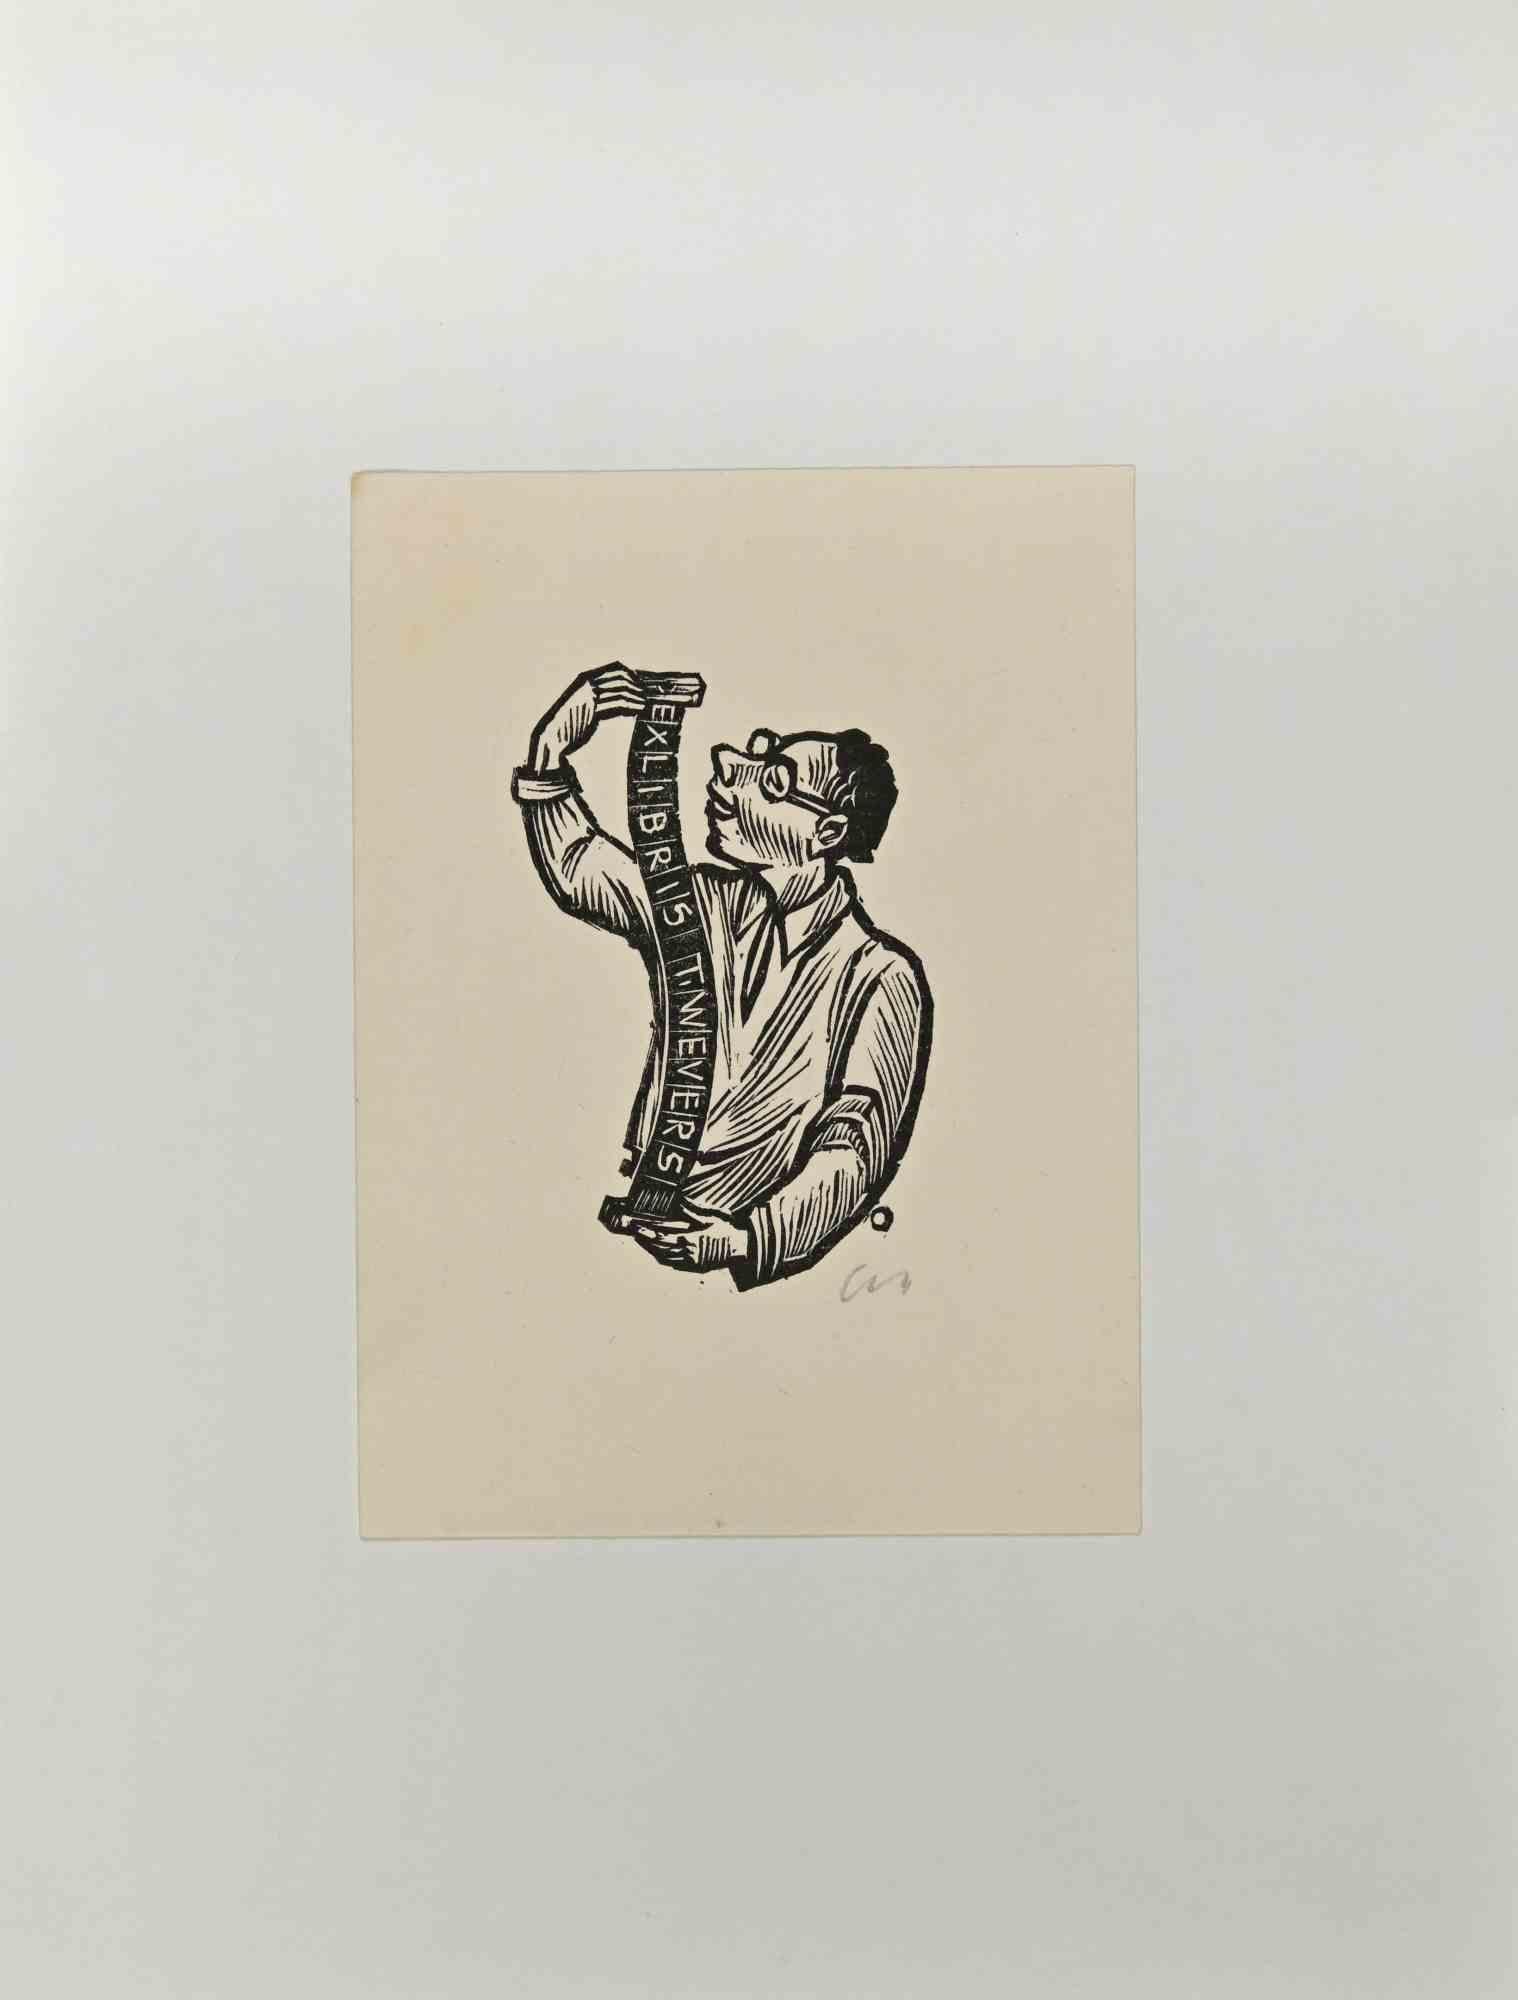  Ex Libris  - T. Wevers - Woodcut - 1953